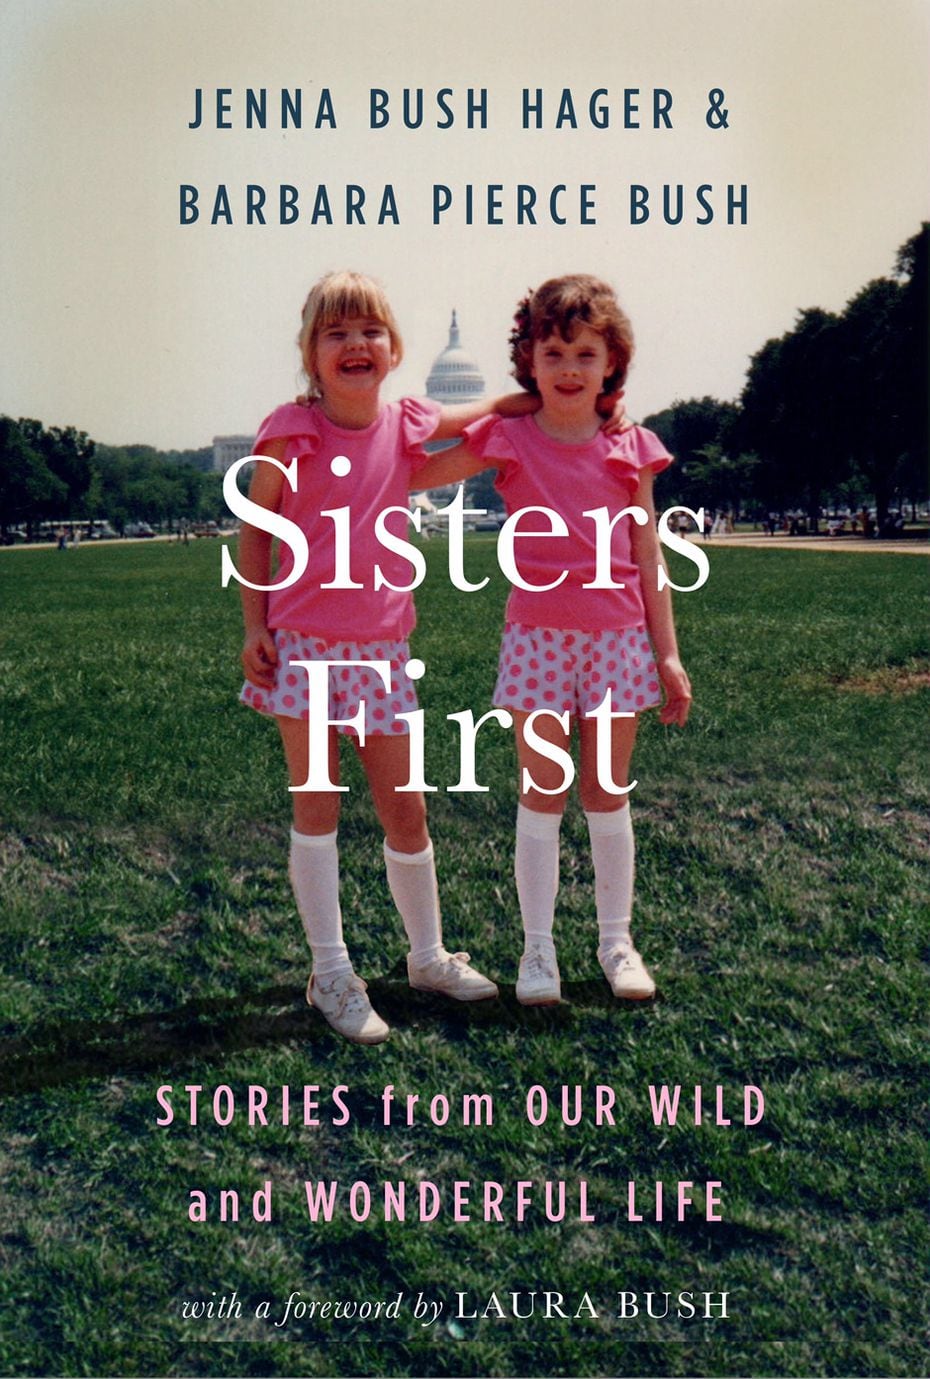 Jenna Bush Hager Barbara Pierce Bush Tout Their Wild And Wonderful Stories In Memoir